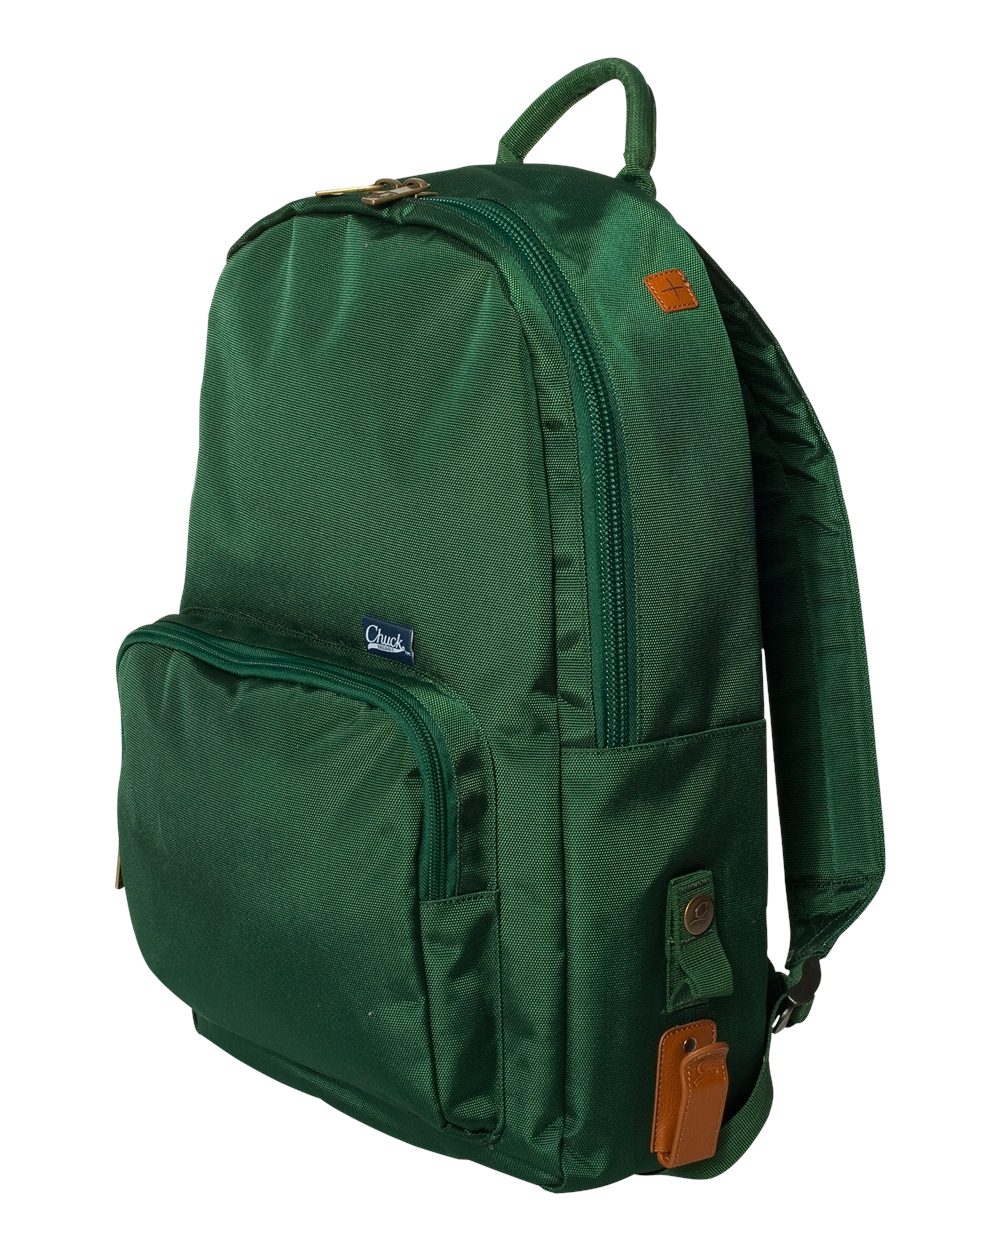 Original Chuck Classic Backpack - 28744